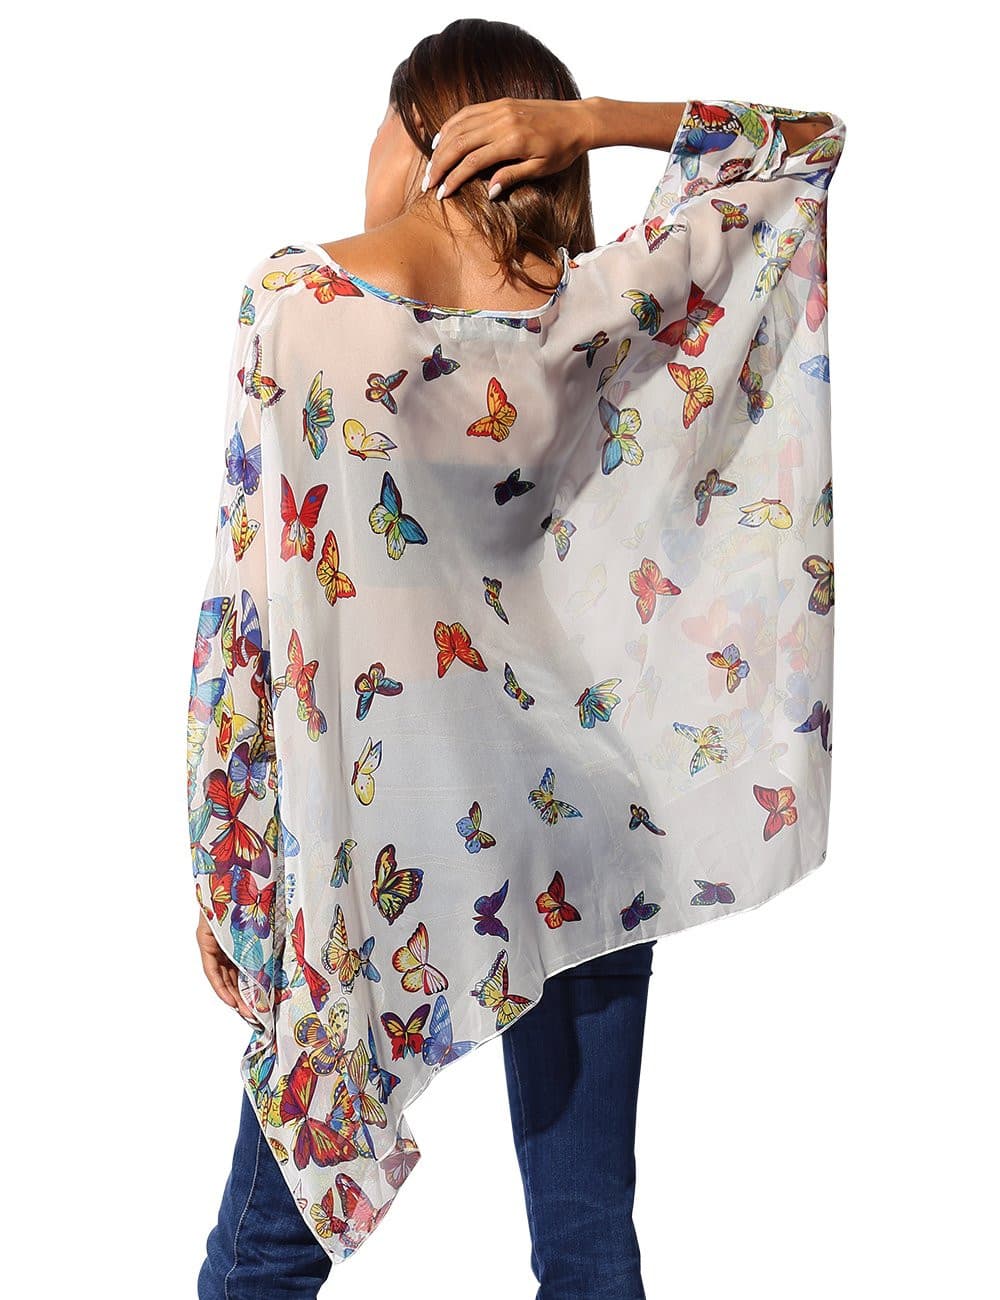 DJT Butterfly Printed Women's Chiffon Caftan Poncho Cover Ups Tunic Tops